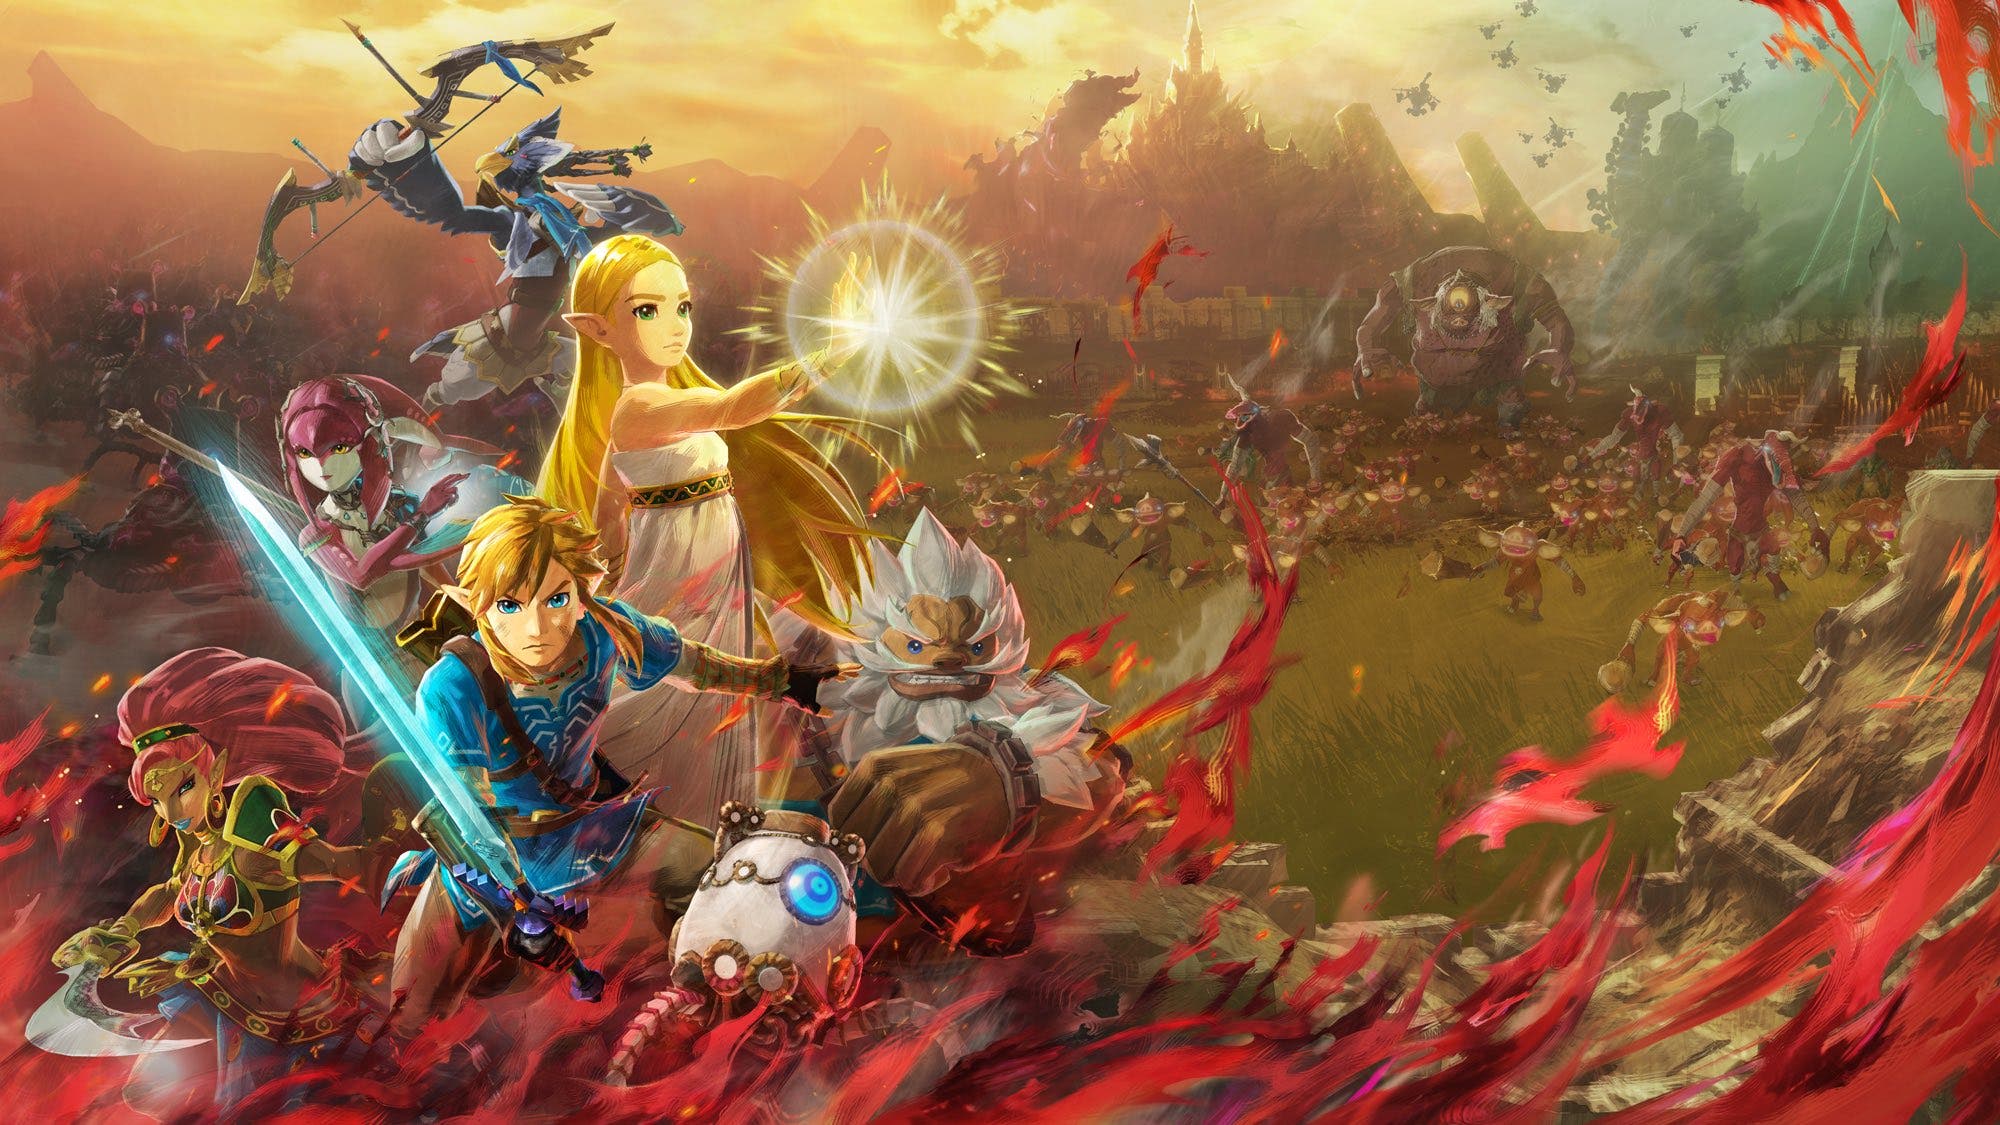 Koei Tecmo mostrará el primer gameplay de Hyrule Warriors: La era del cataclismo en el TGS 2020 Online